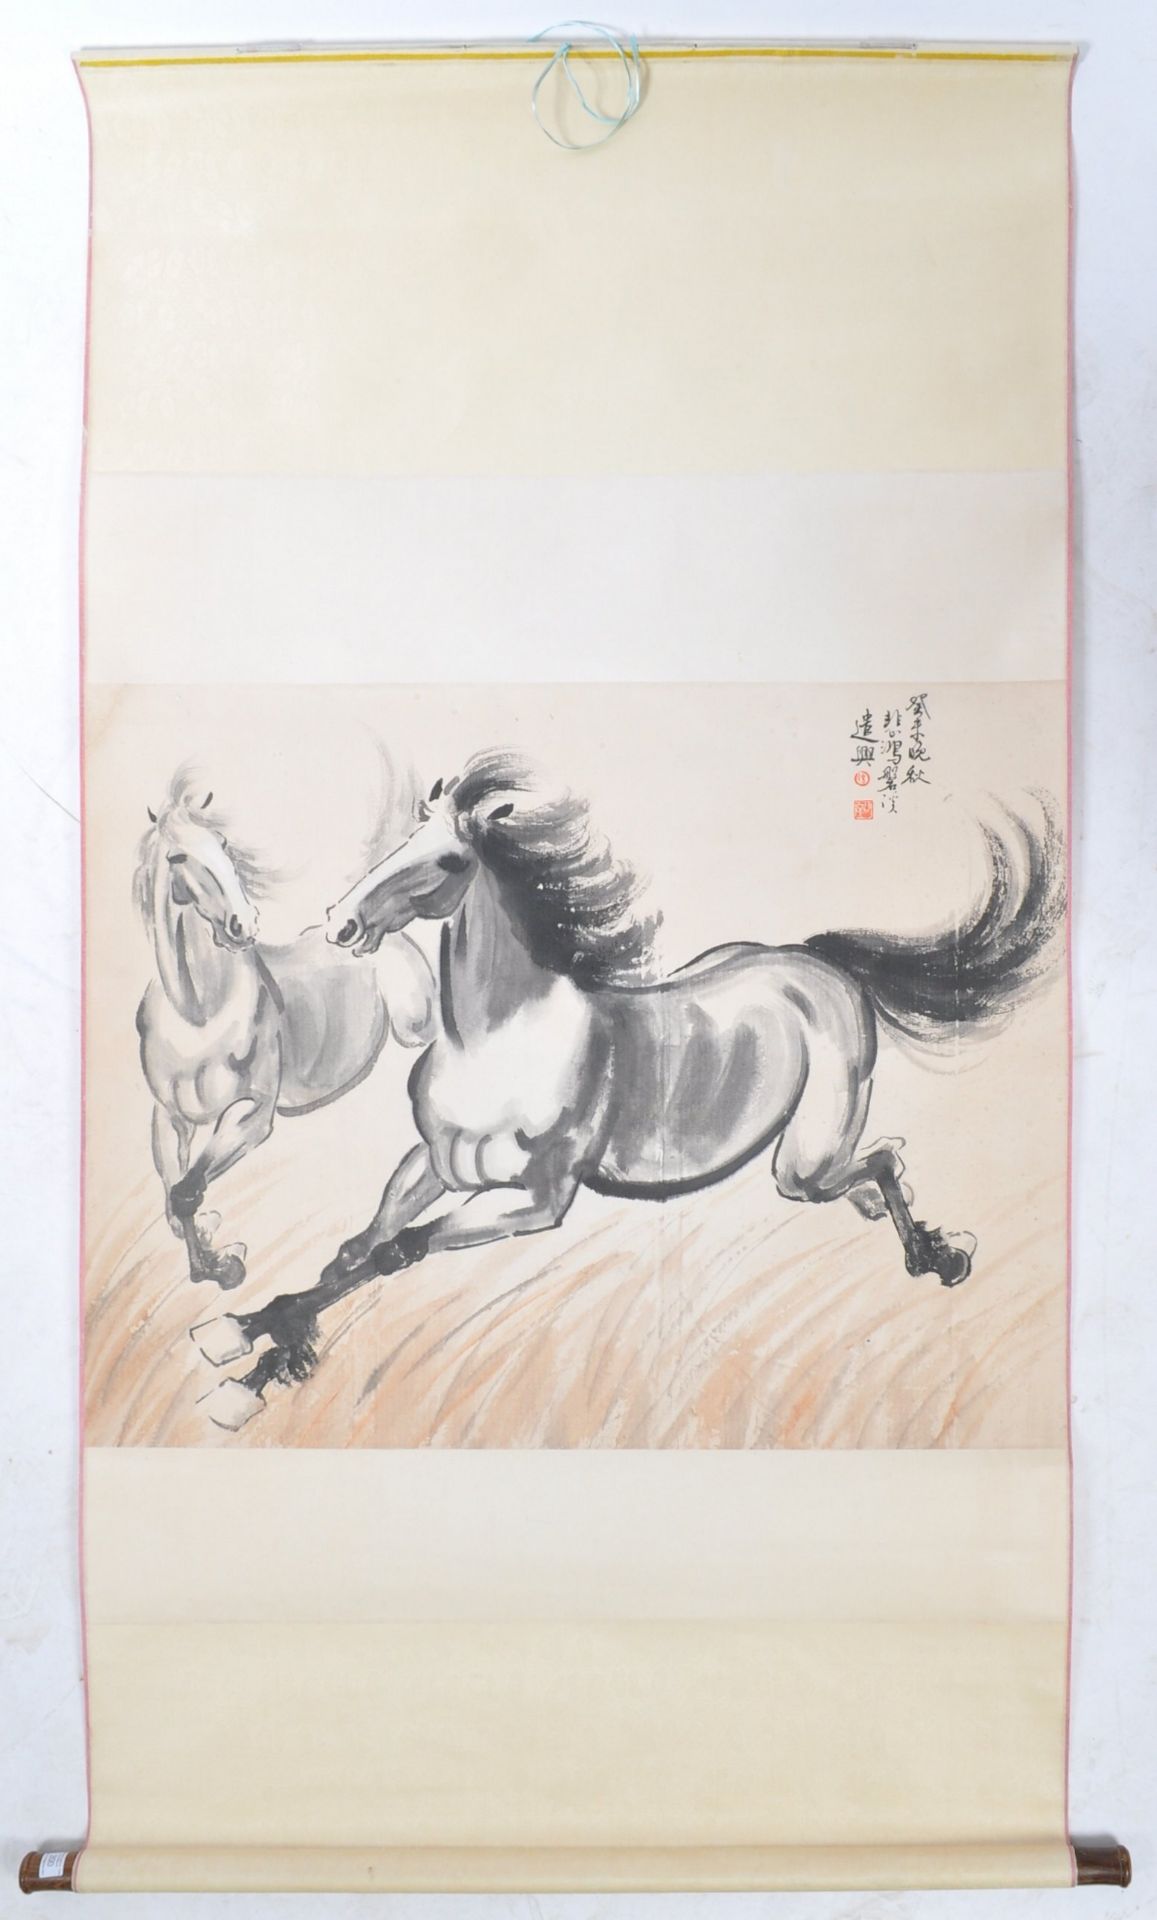 XU BEIHONG (1895-1953) INK ON PAPER OF HORSES RACING